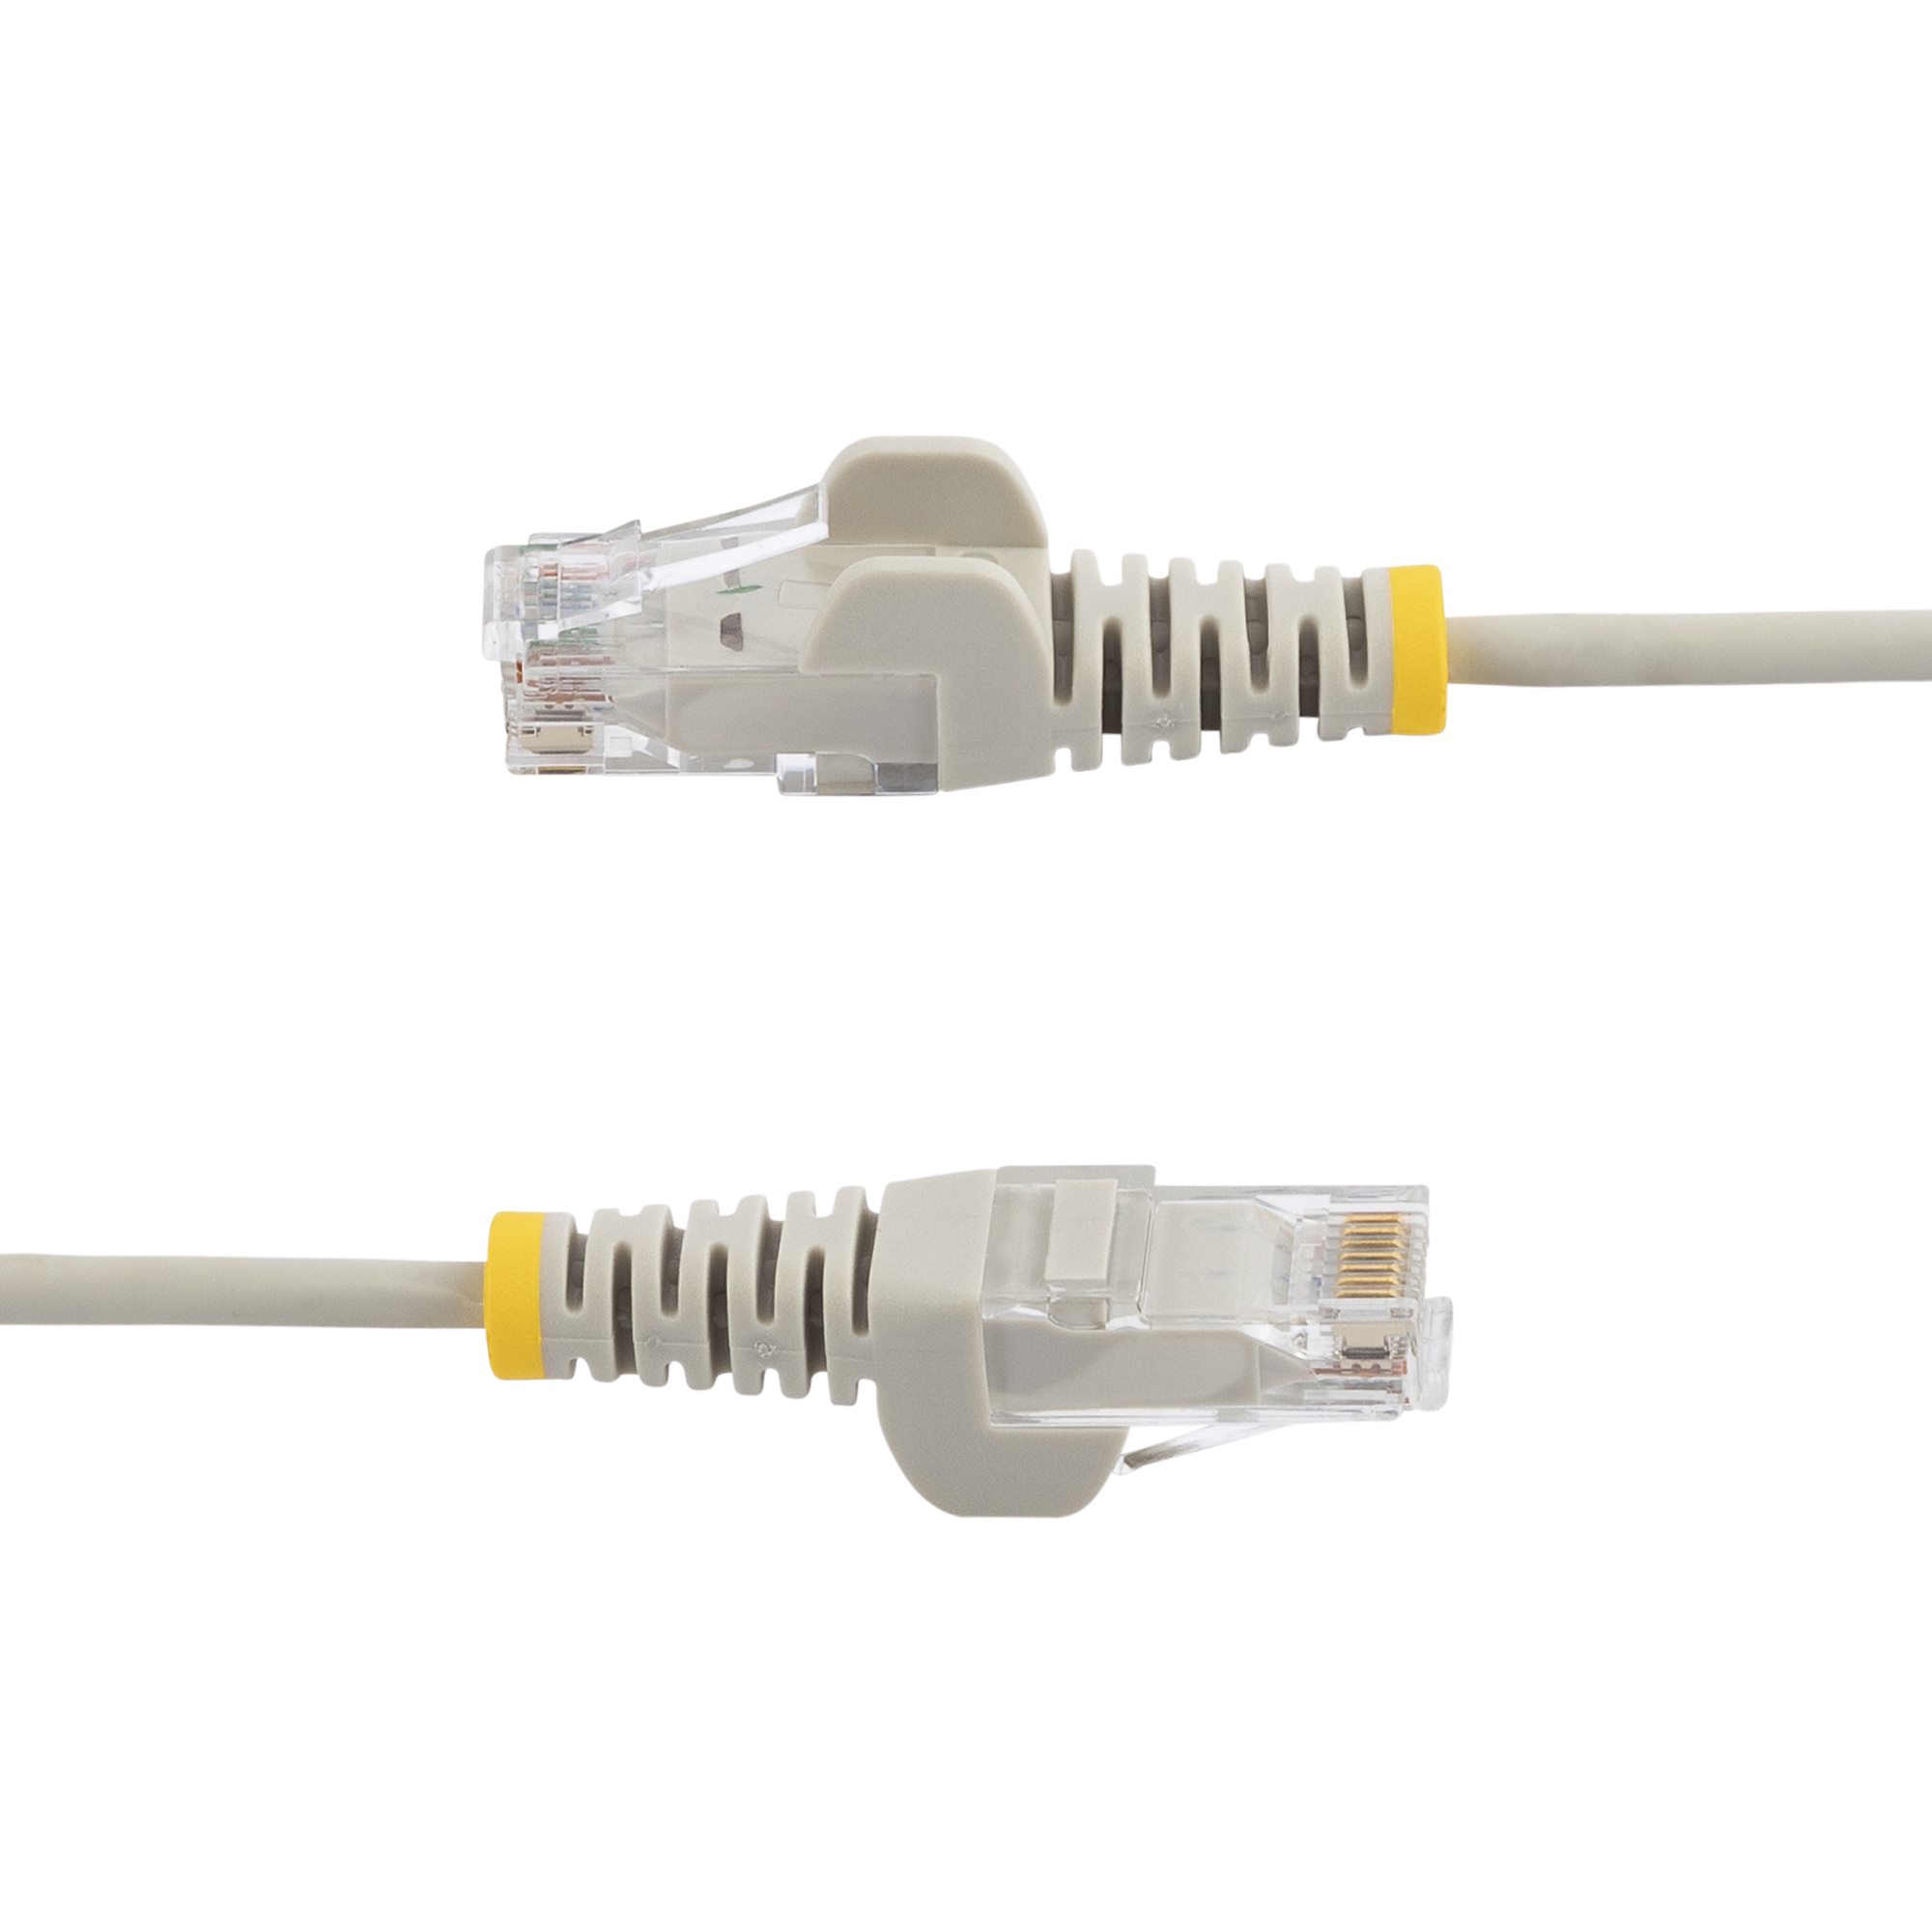 StarTech.com CAT 6 Network Connector - Clear - Cat6 Cable - RJ45